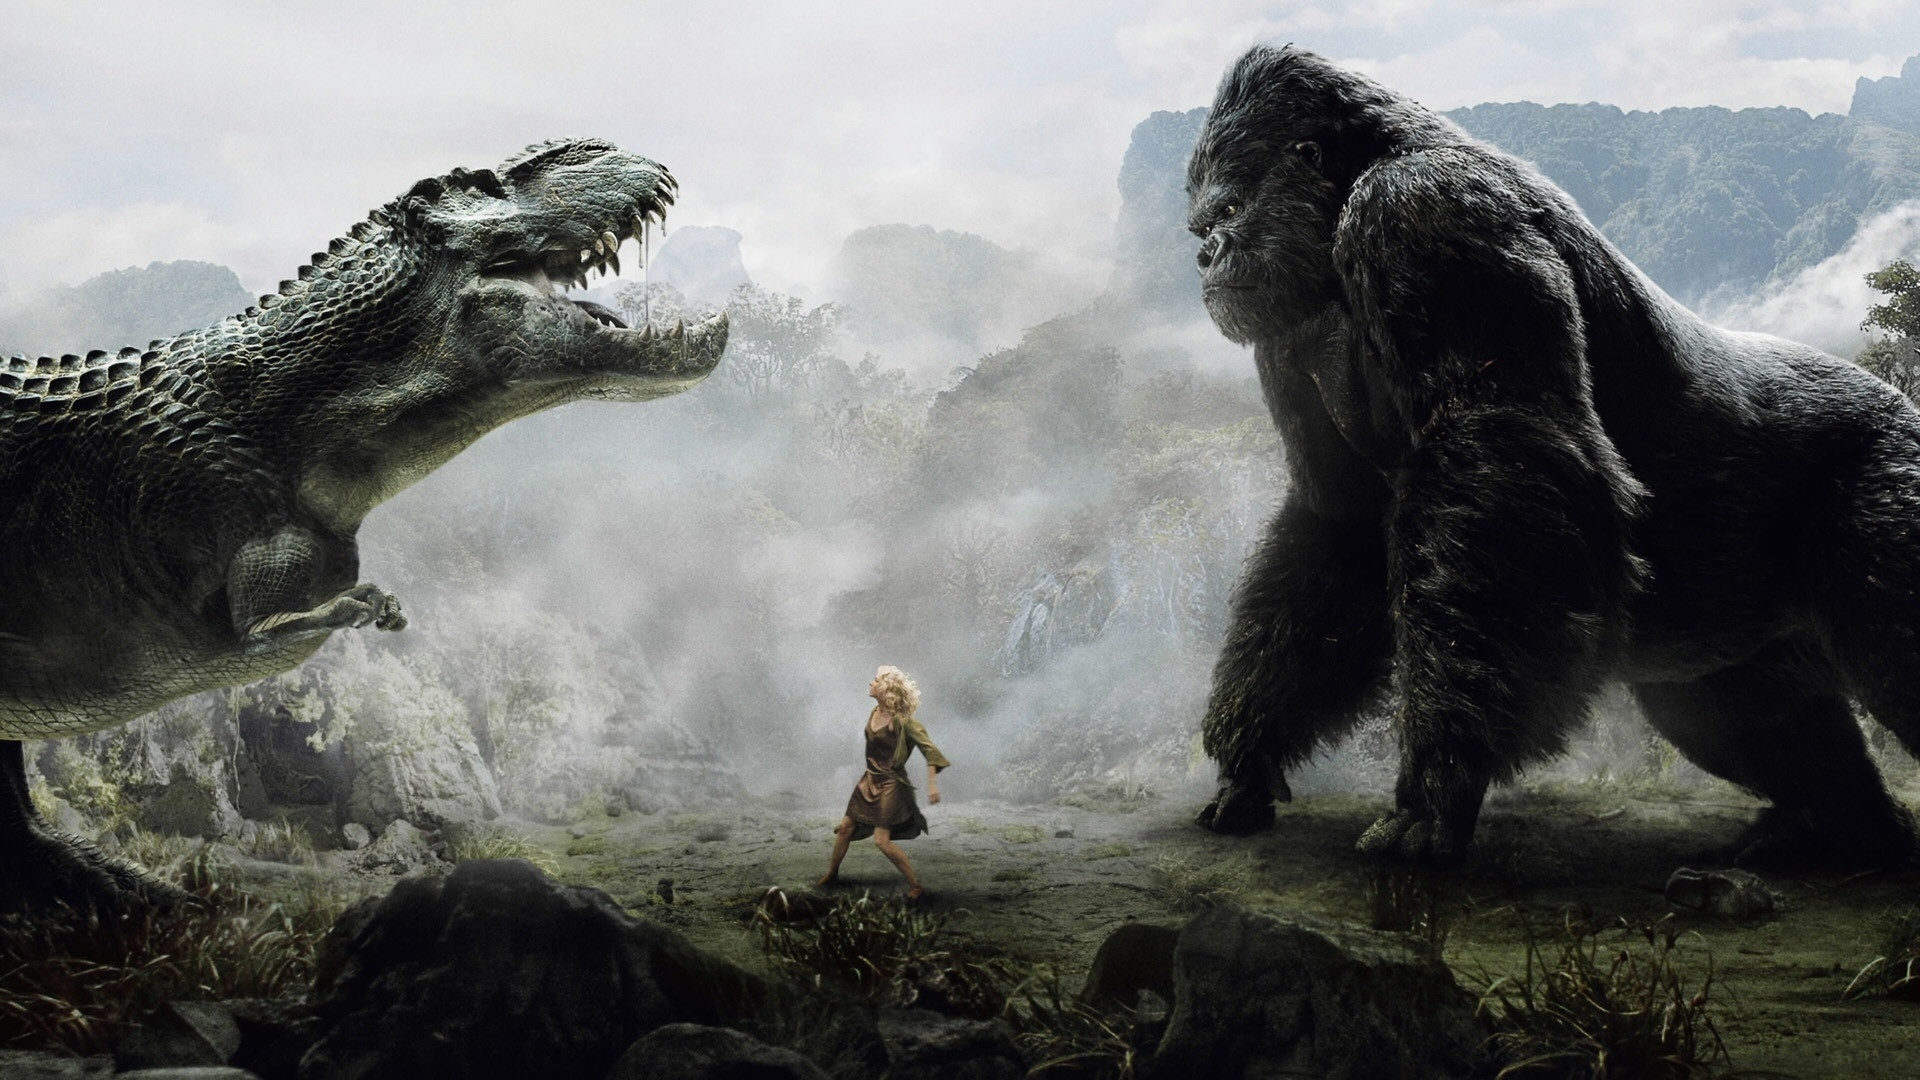 Wallpapers king Kong dinosaur battle on the desktop